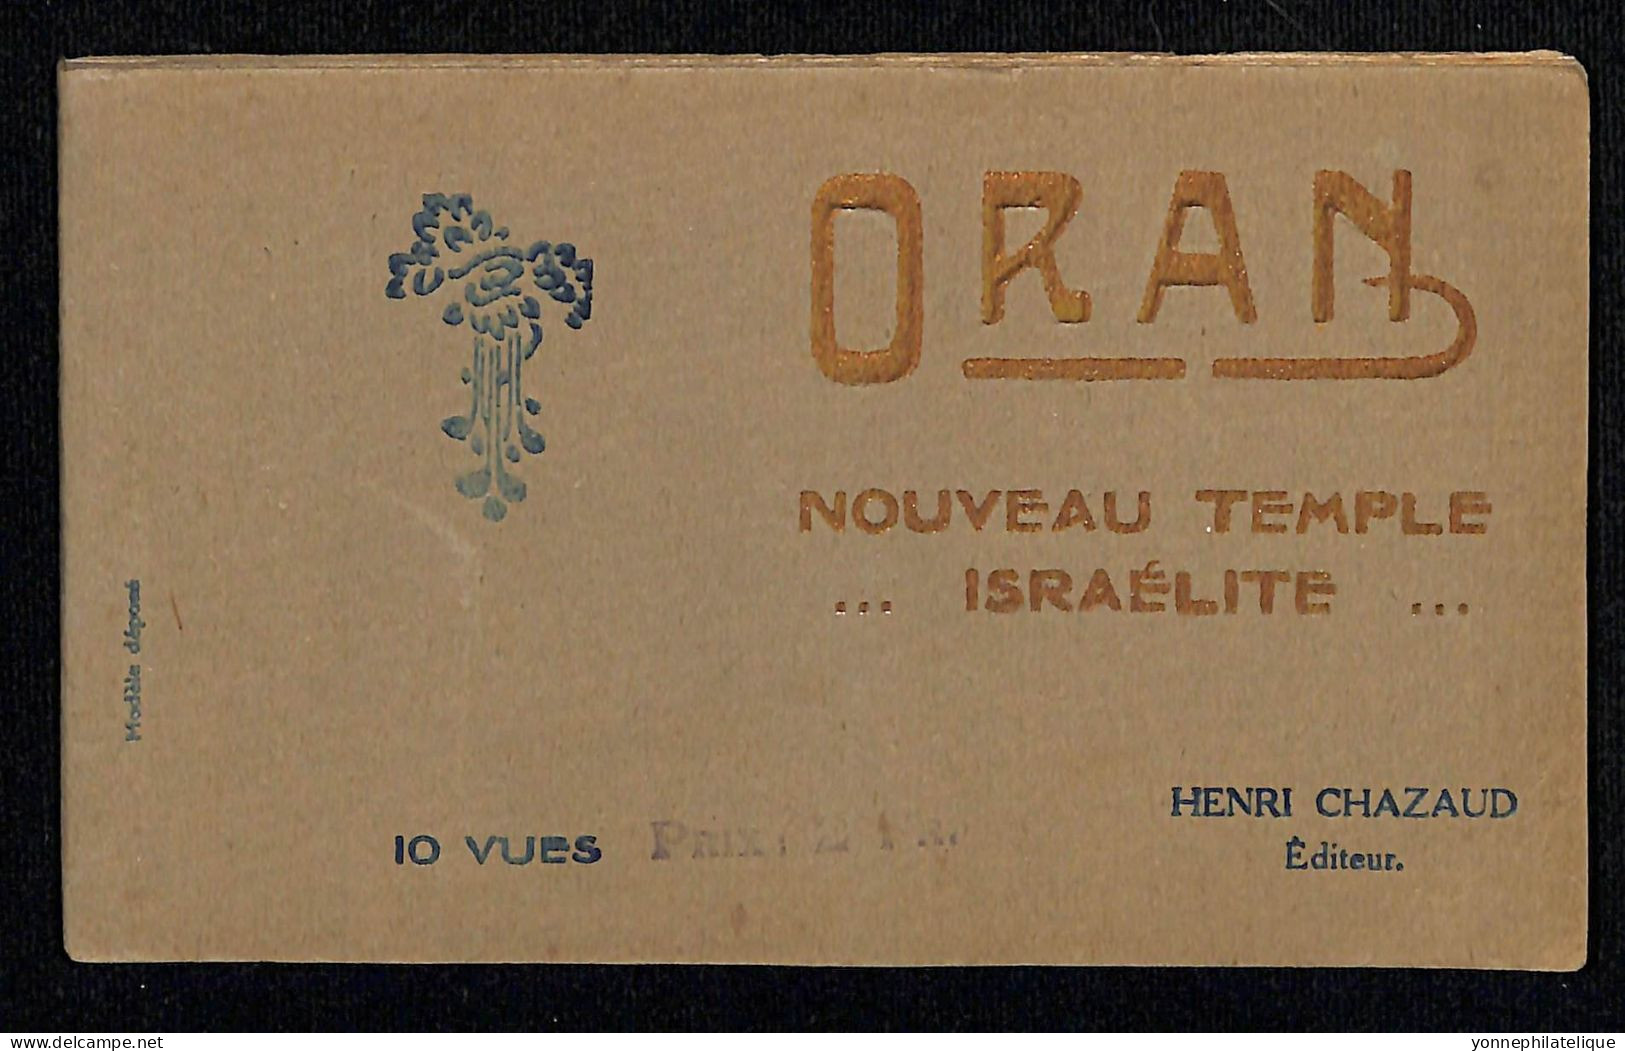 JUDAÏCA - JEWISH - ALGÉRIE - ORAN - Carnet De 10 Vues Nouveau Temple Israélite - édition Henri CHAZAUD - Jud-302 - Judaika